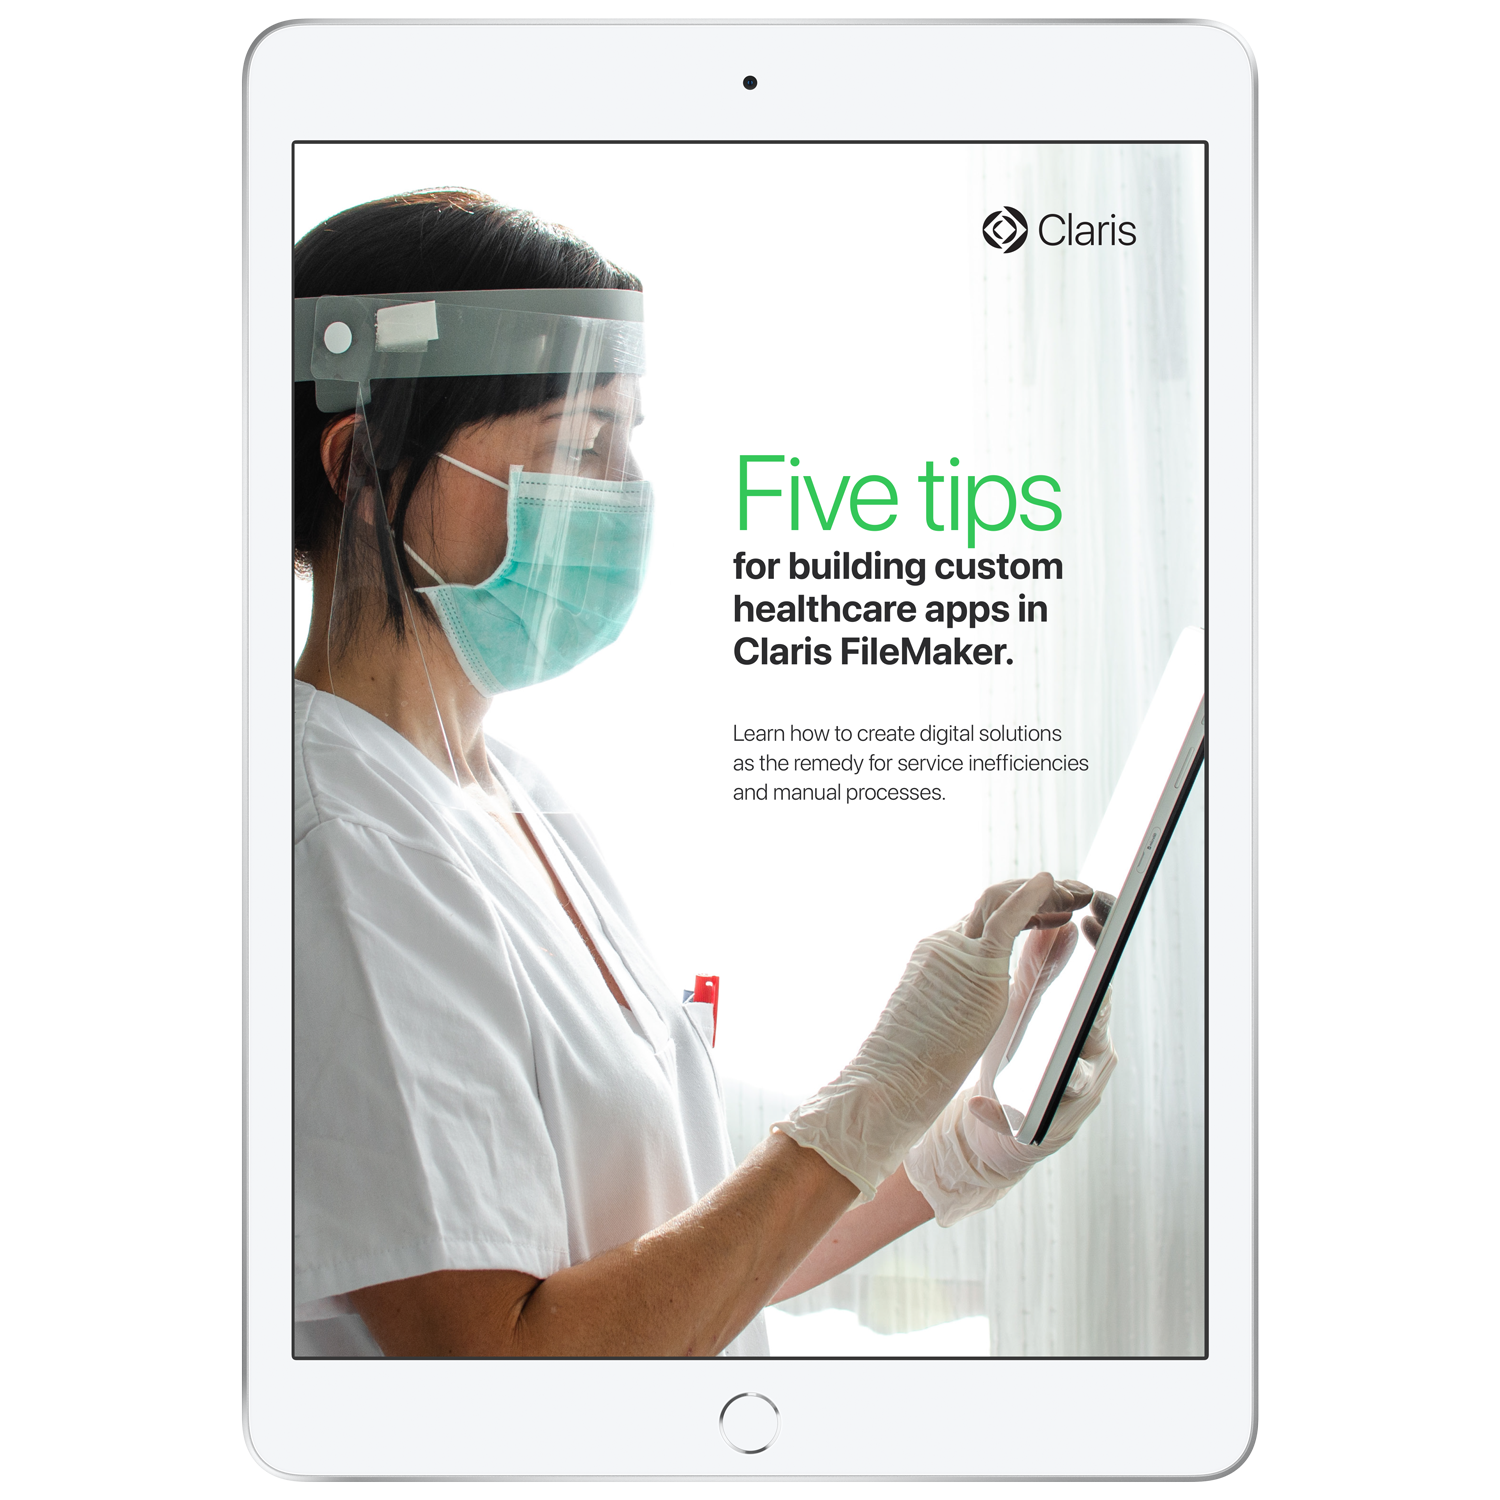 Get the ebook five tips for building custom healthcare apps in Claris FileMaker